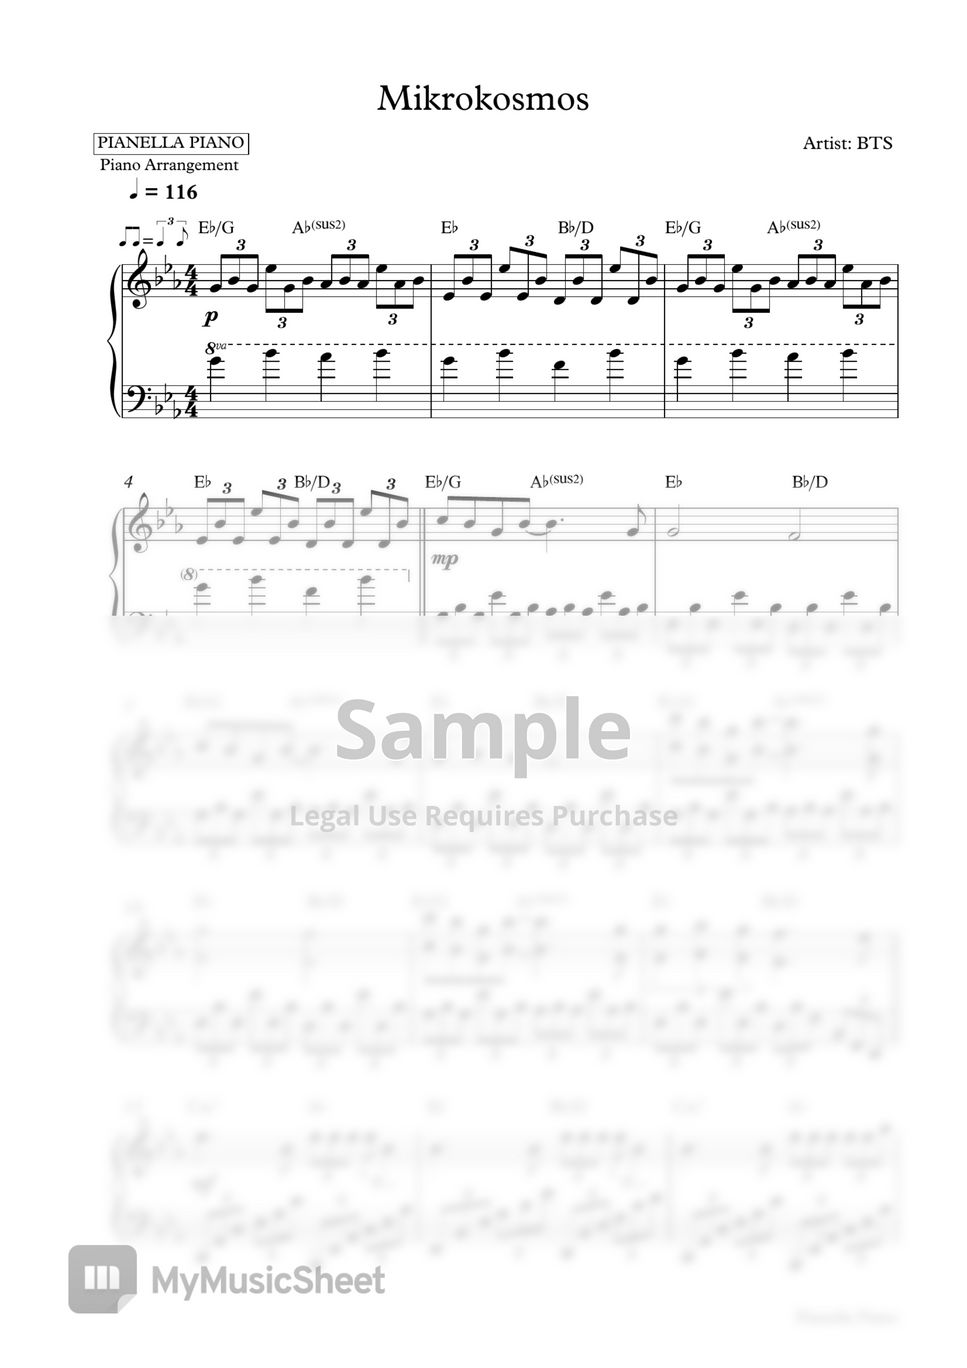 BTS - MIKROKOSMOS (Piano Sheet) by Pianella Piano